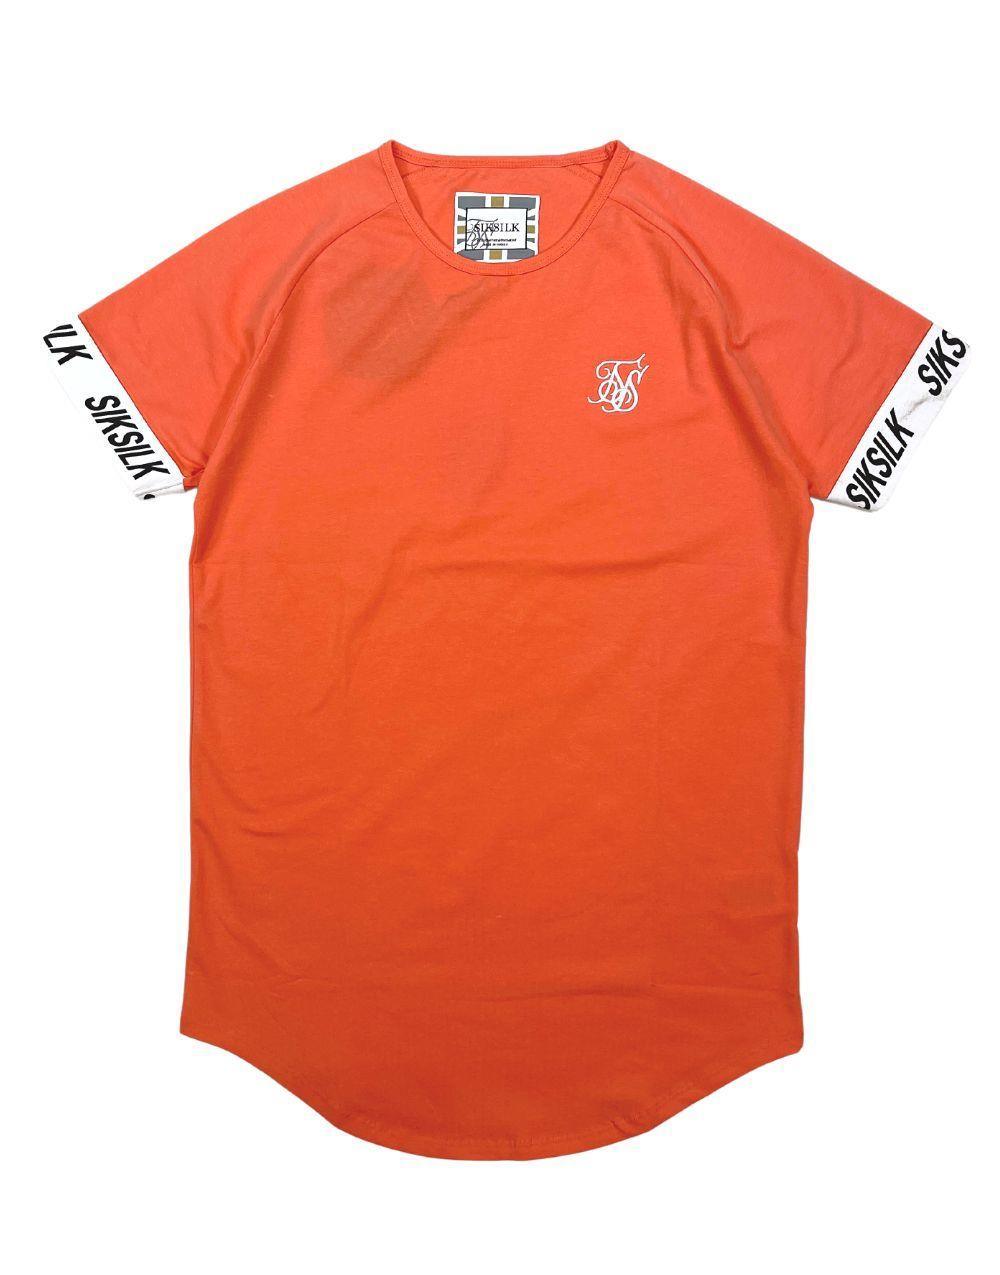 SikSilk Orange Tech Tee Men's T-Shirt - STREET MODE ™